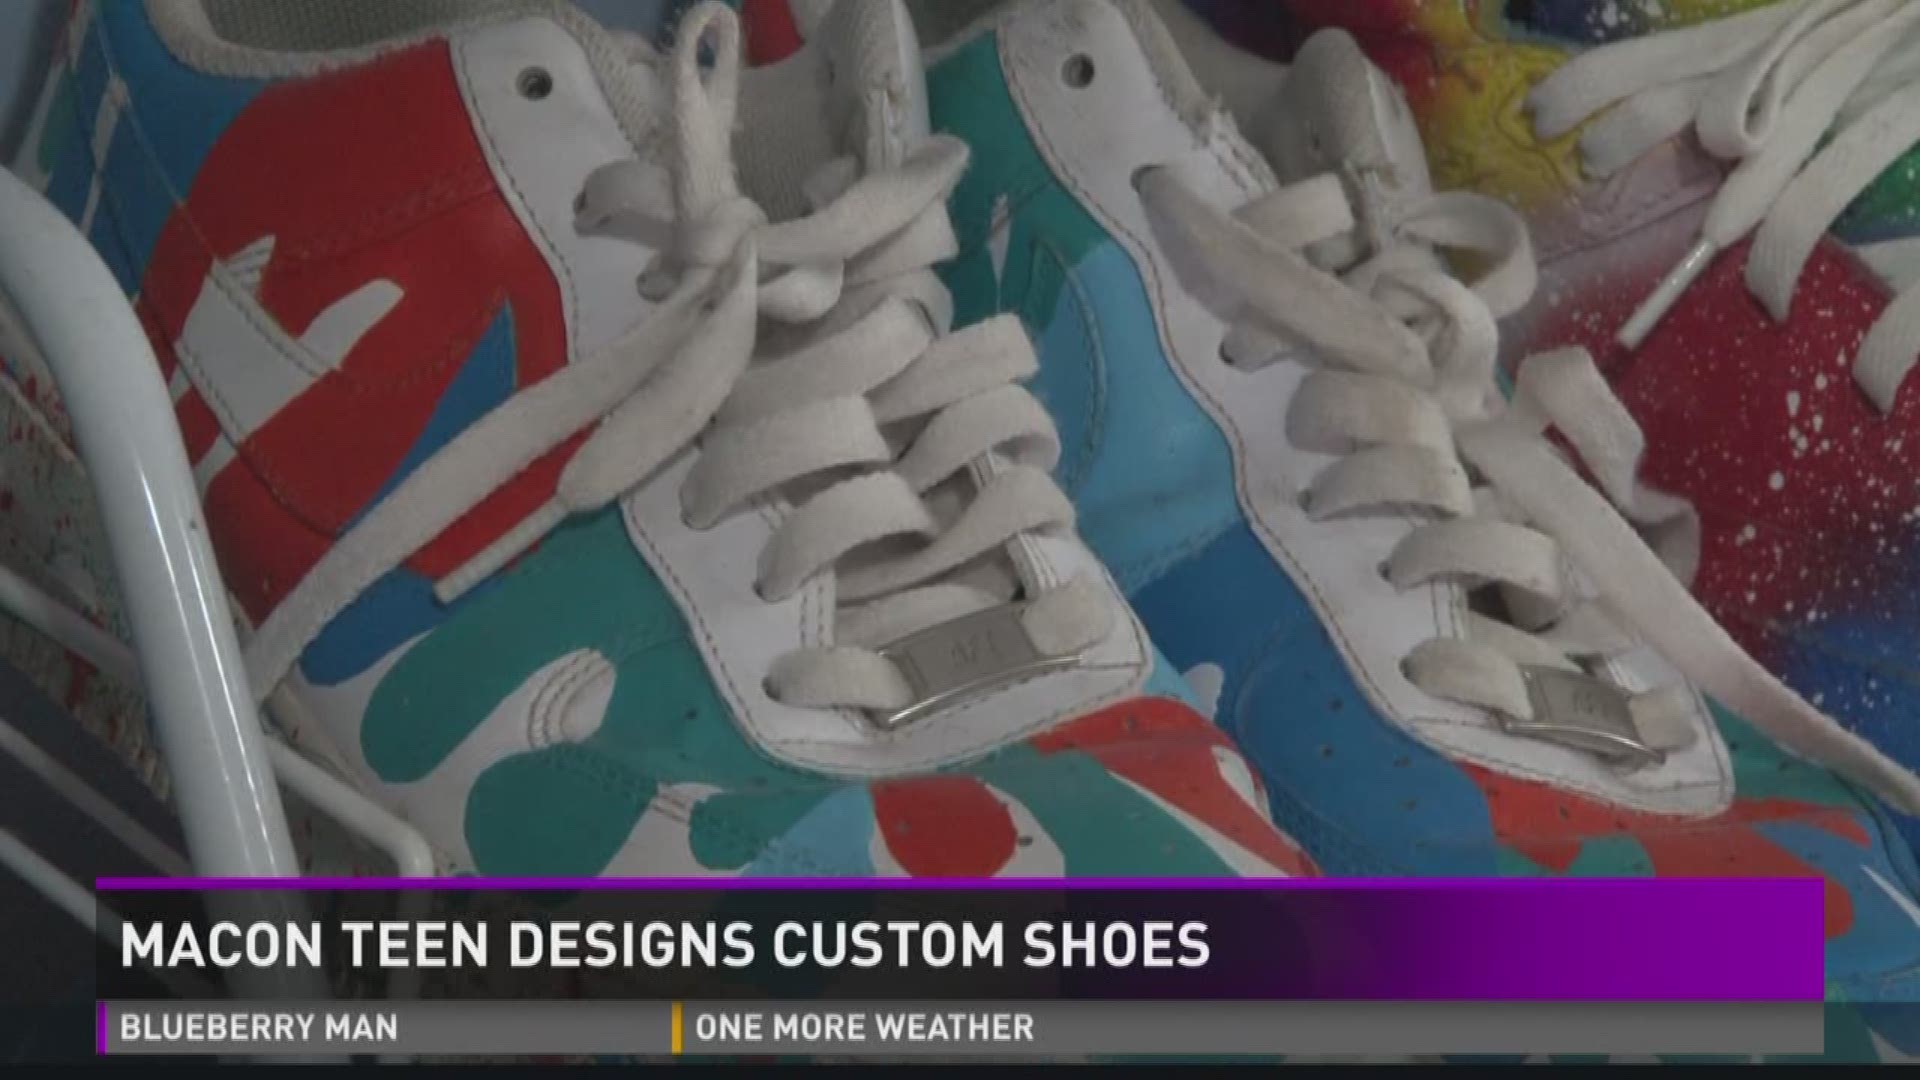 Macon teen designs custom shoes